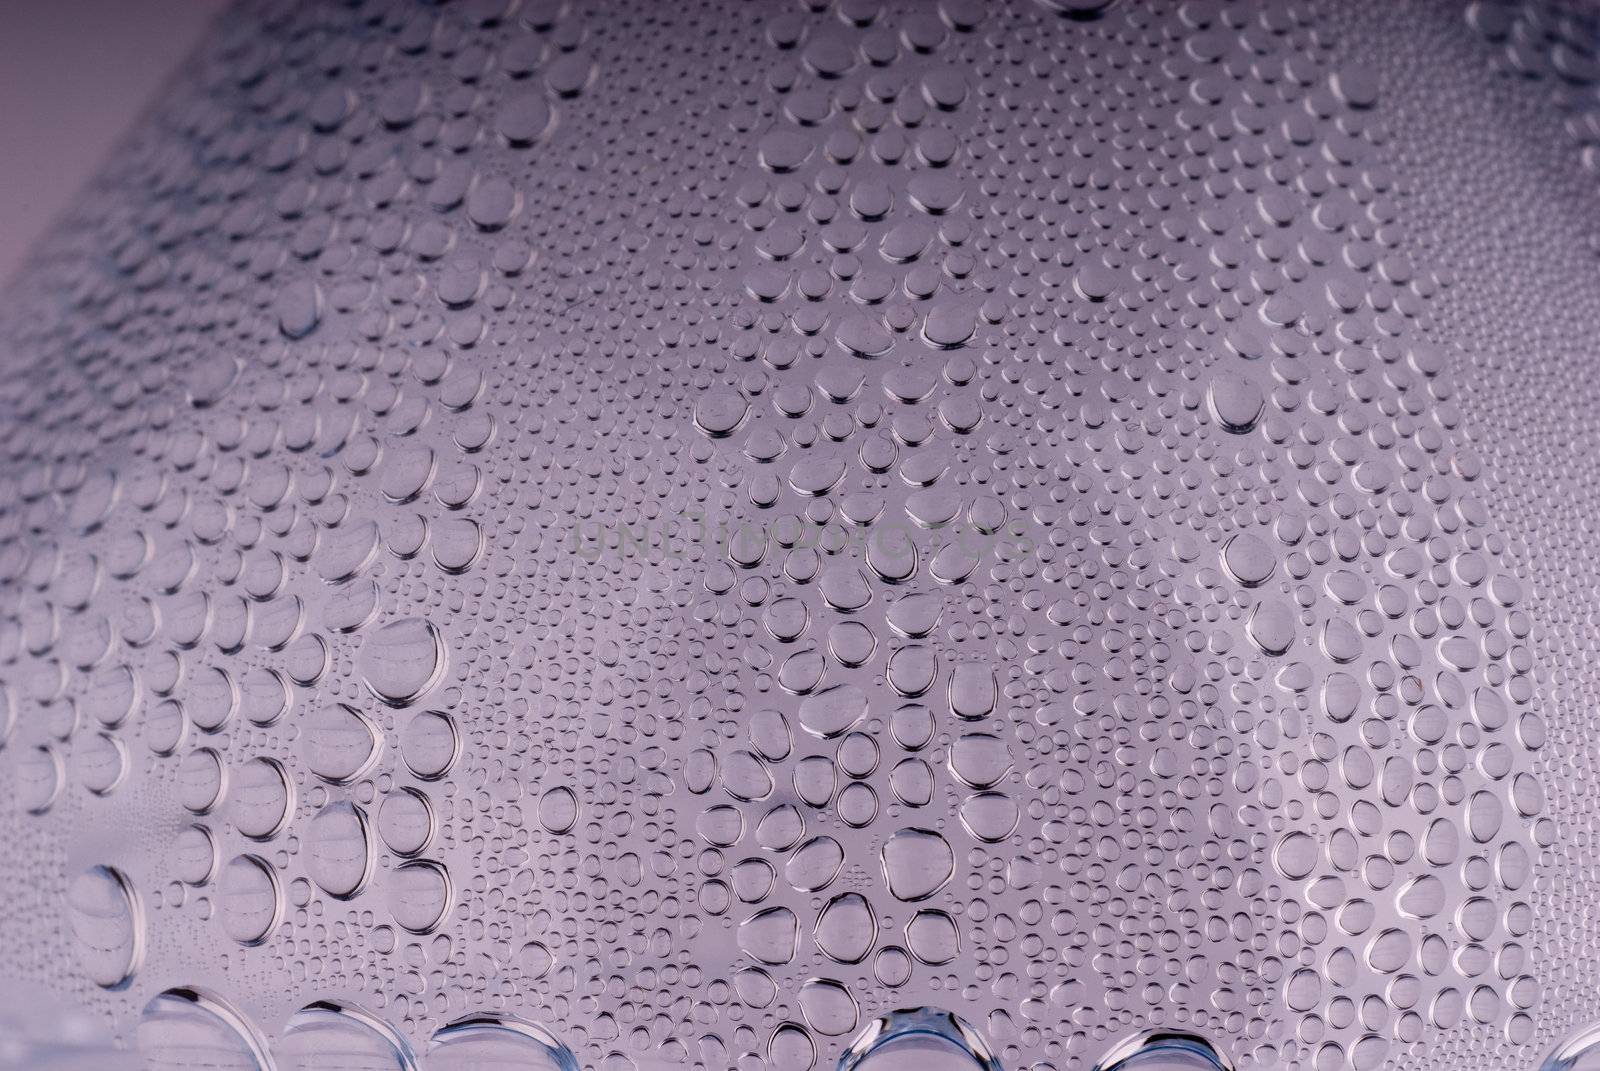 Water droplets on a bottle